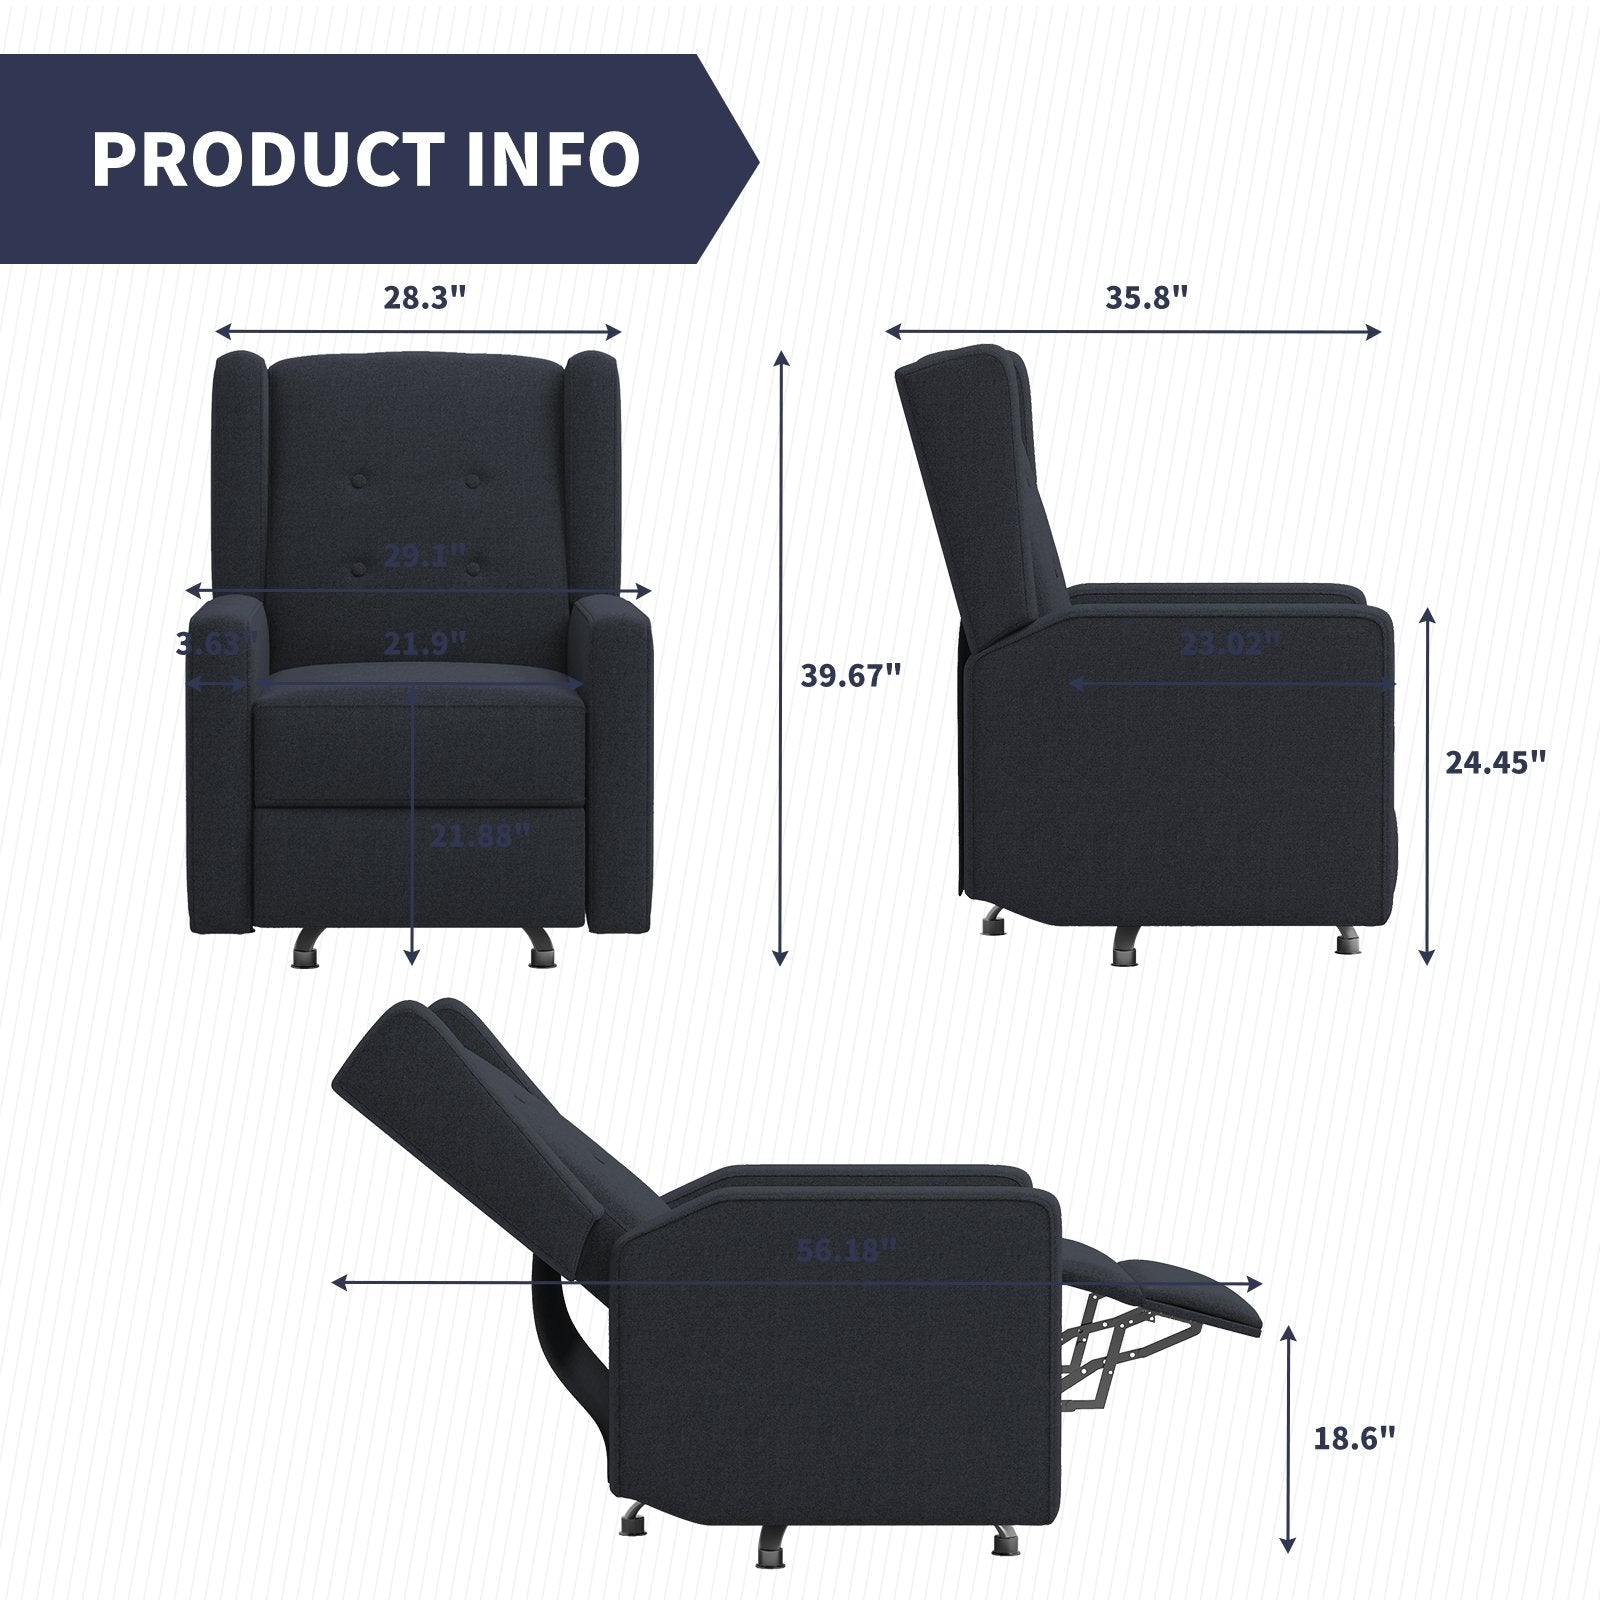 Recliner | Upholstered 360° Swivel Glider Chair with Modern Button Design - Mjkonerecline chair